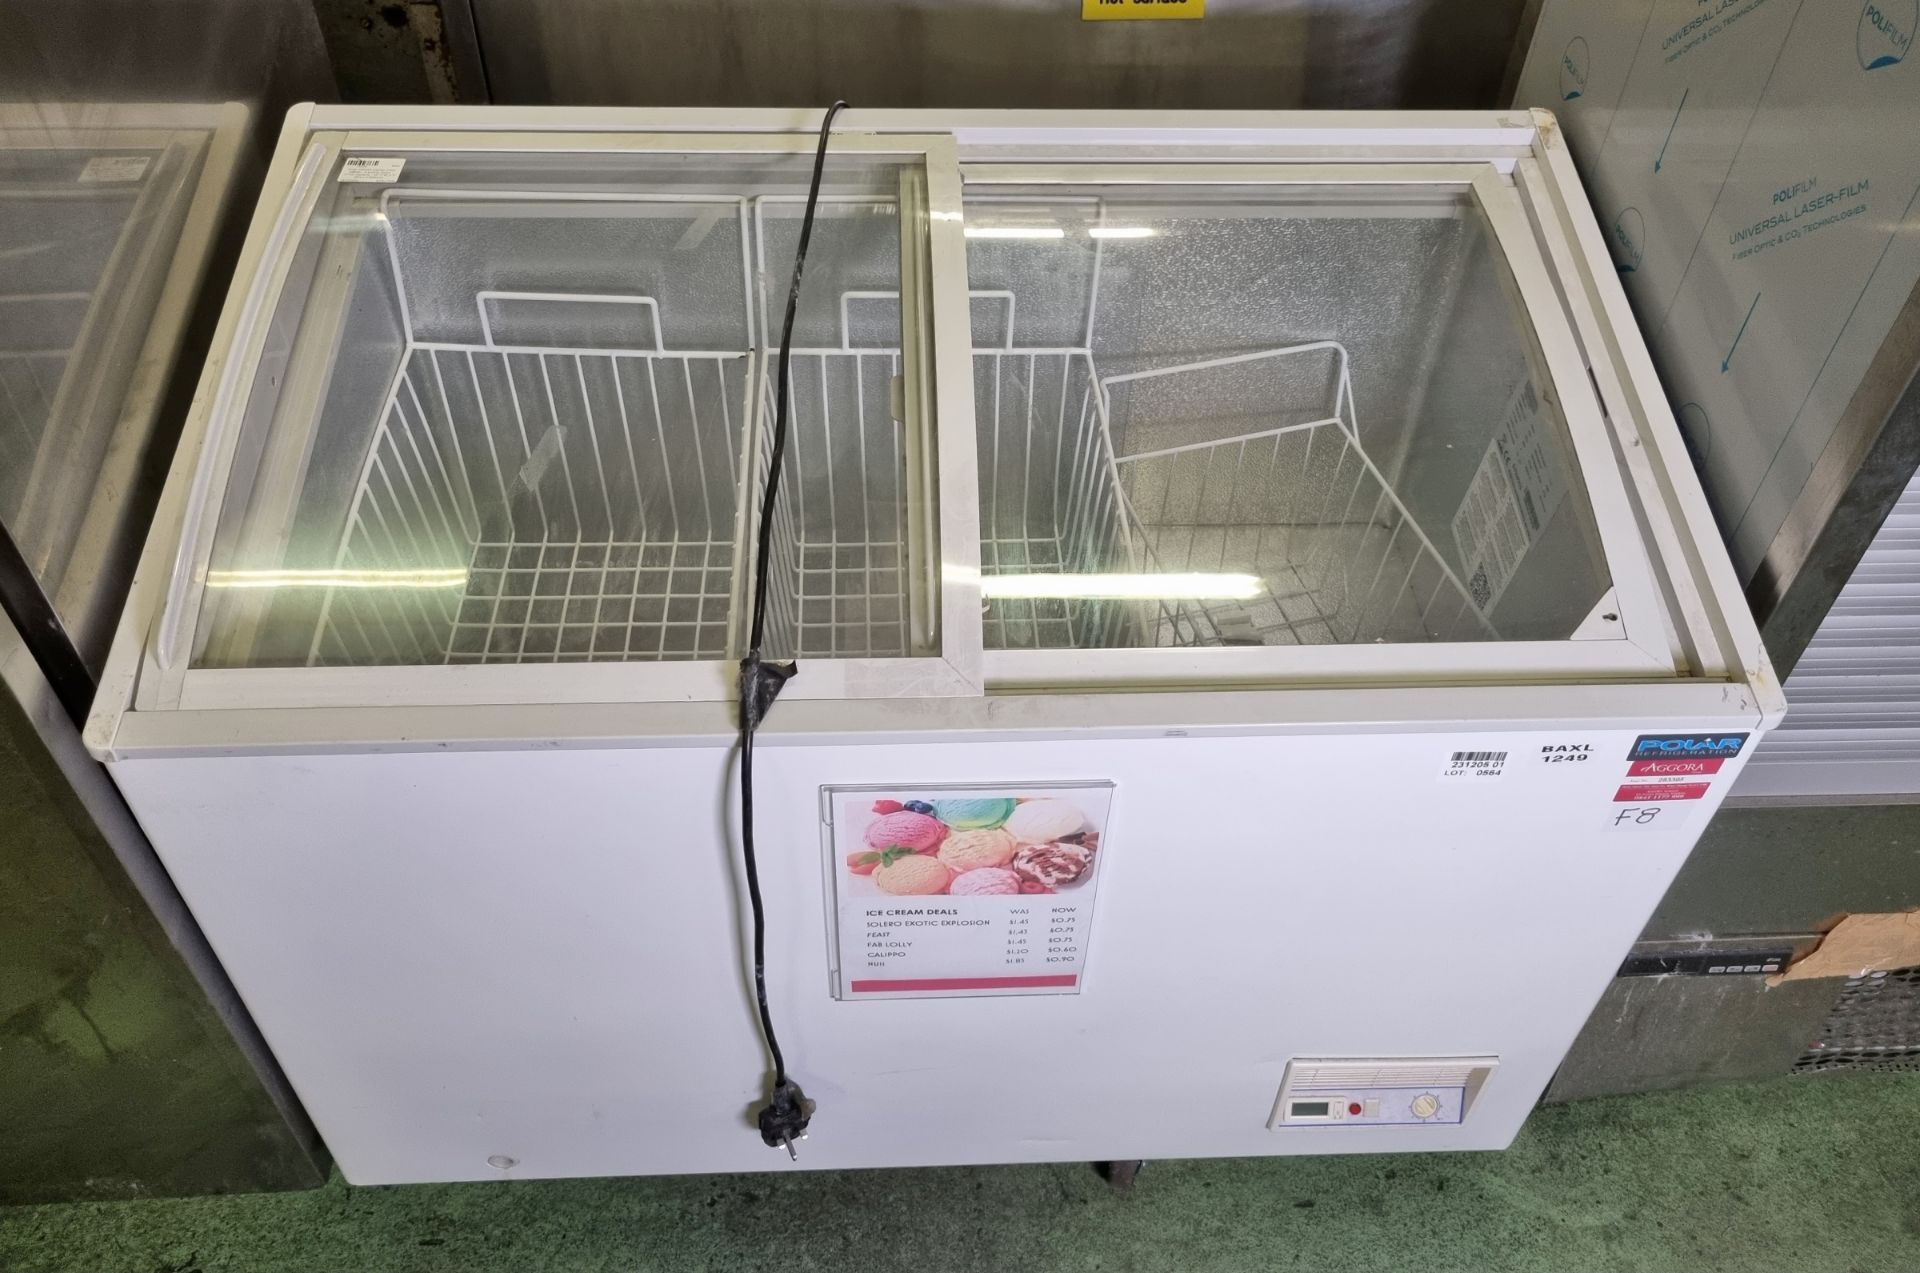 Polar CM434 display chest freezer - 2 sliding doors - 270ltr capacity - W 1195 x D 654 x H 928mm - Image 2 of 4